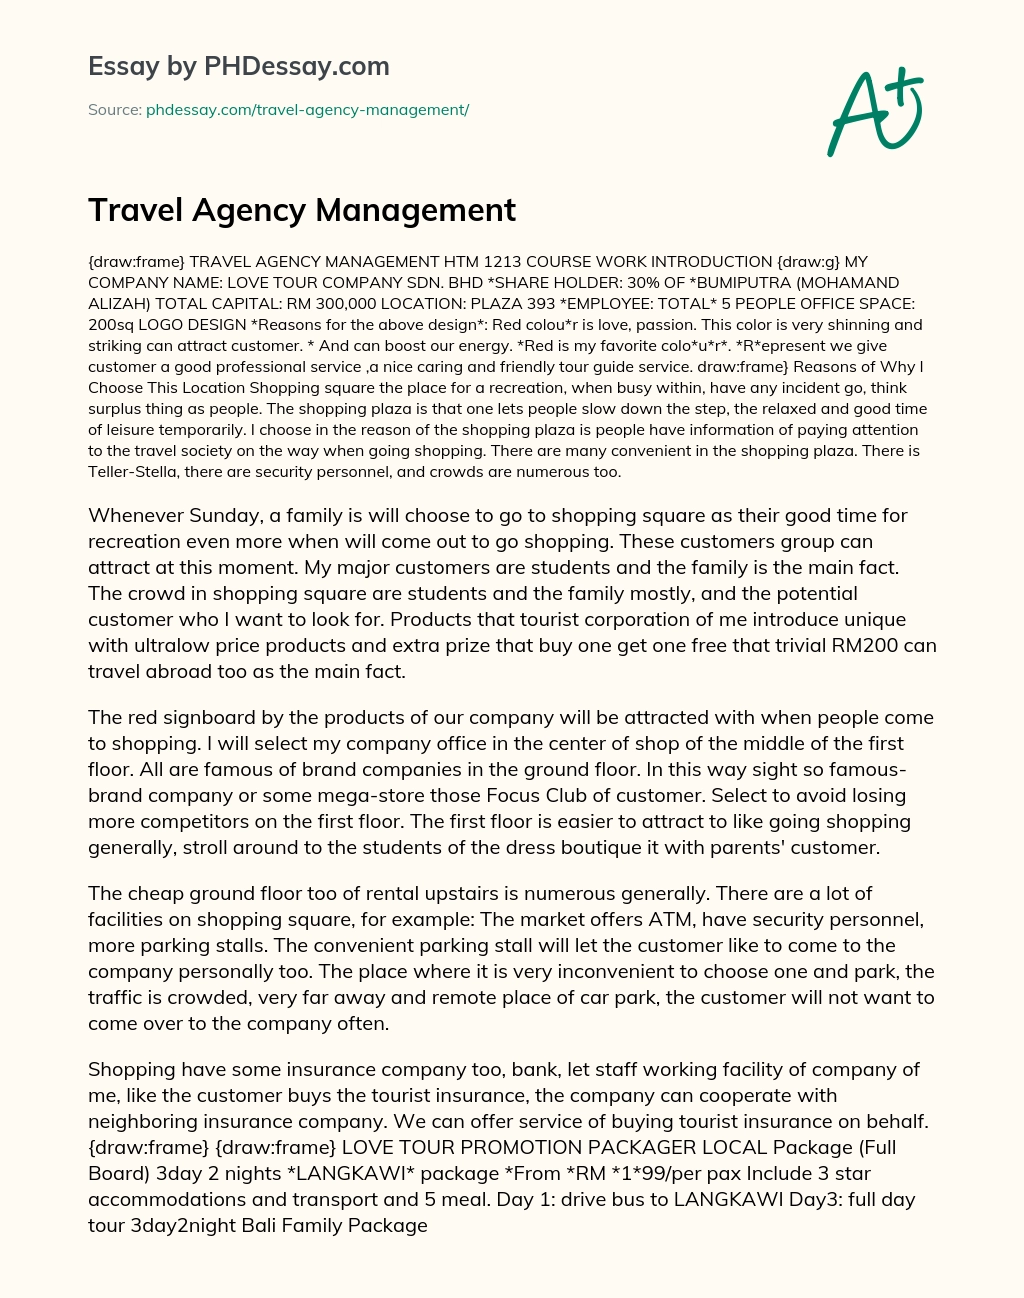 Travel Agency Management essay